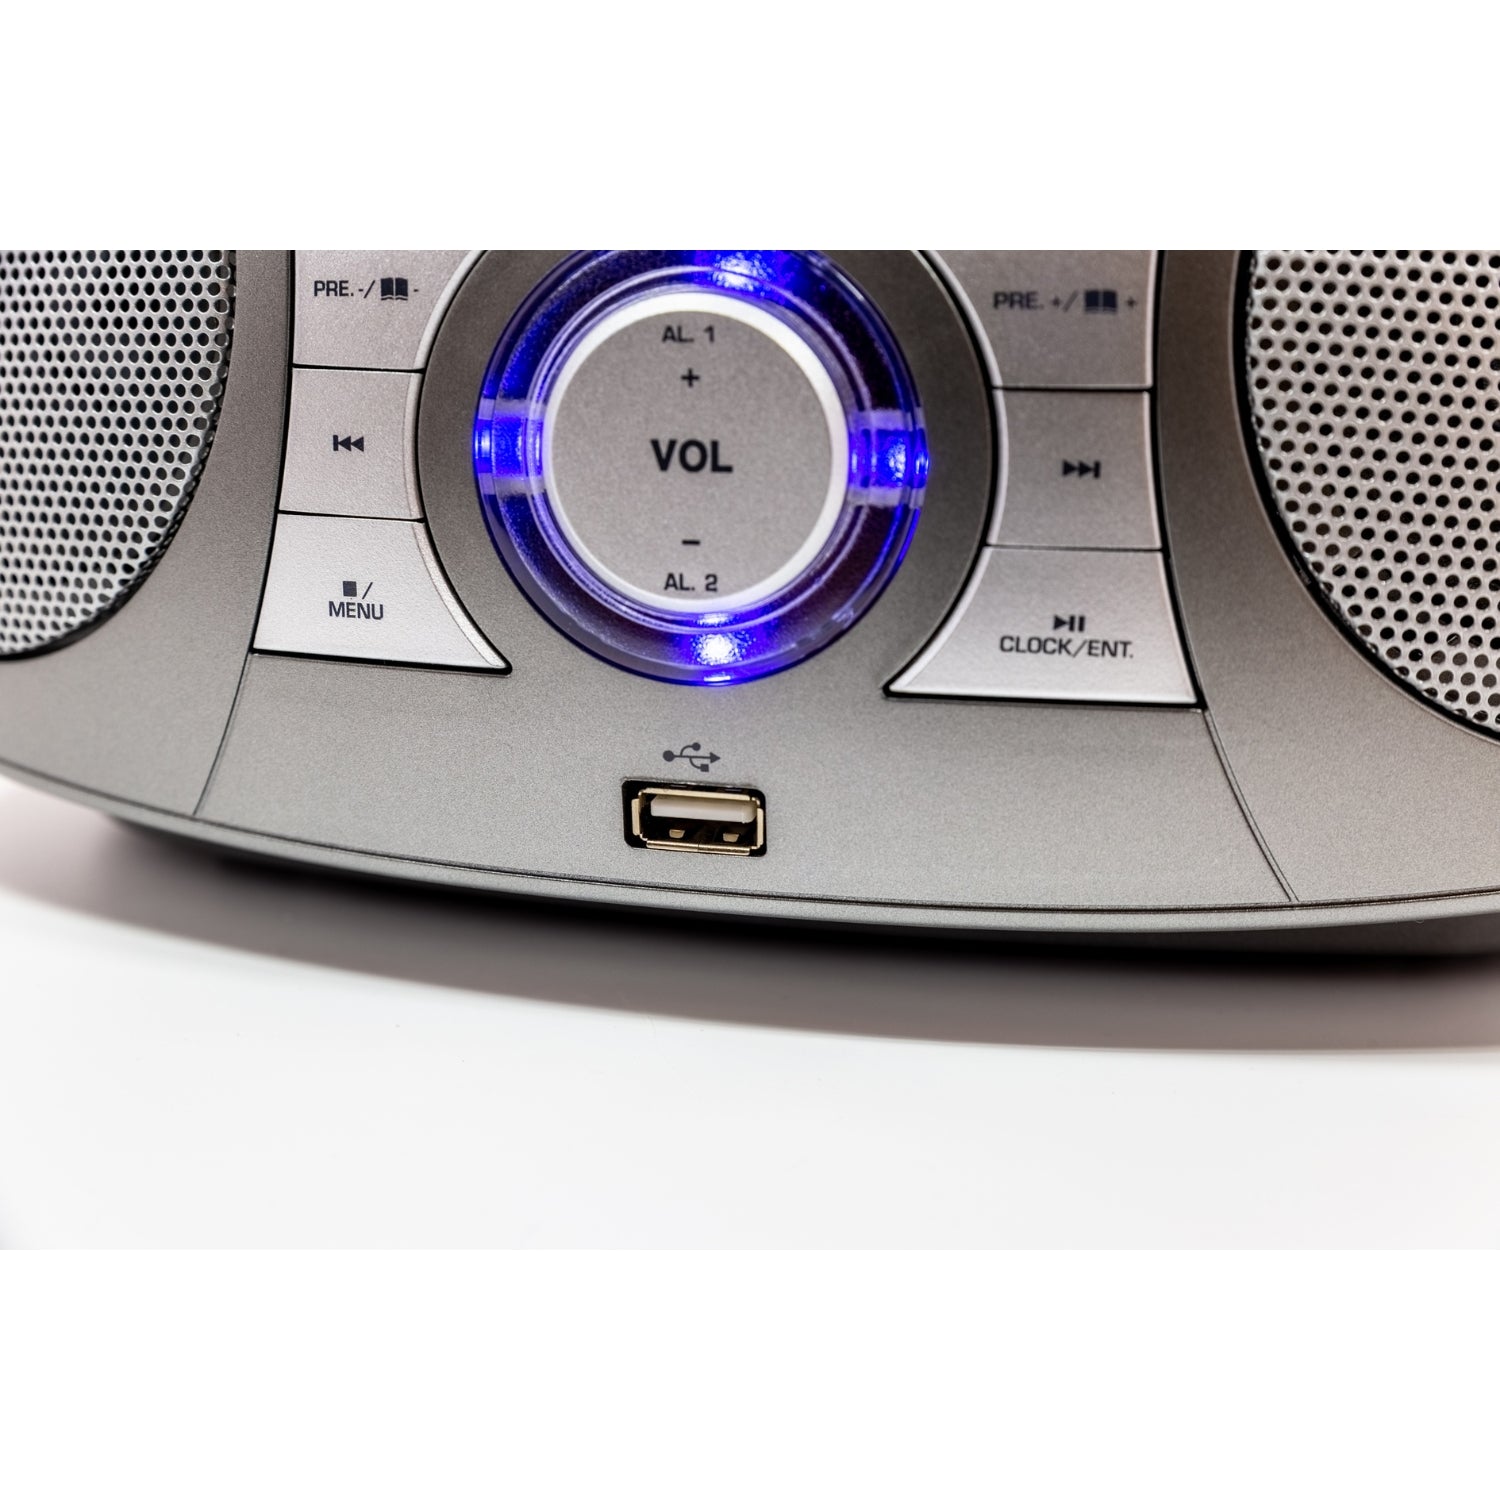 Soundmaster SCD1800TI DAB+ digital radio FM boombox with CD MP3 Bluetooth streaming USB connection